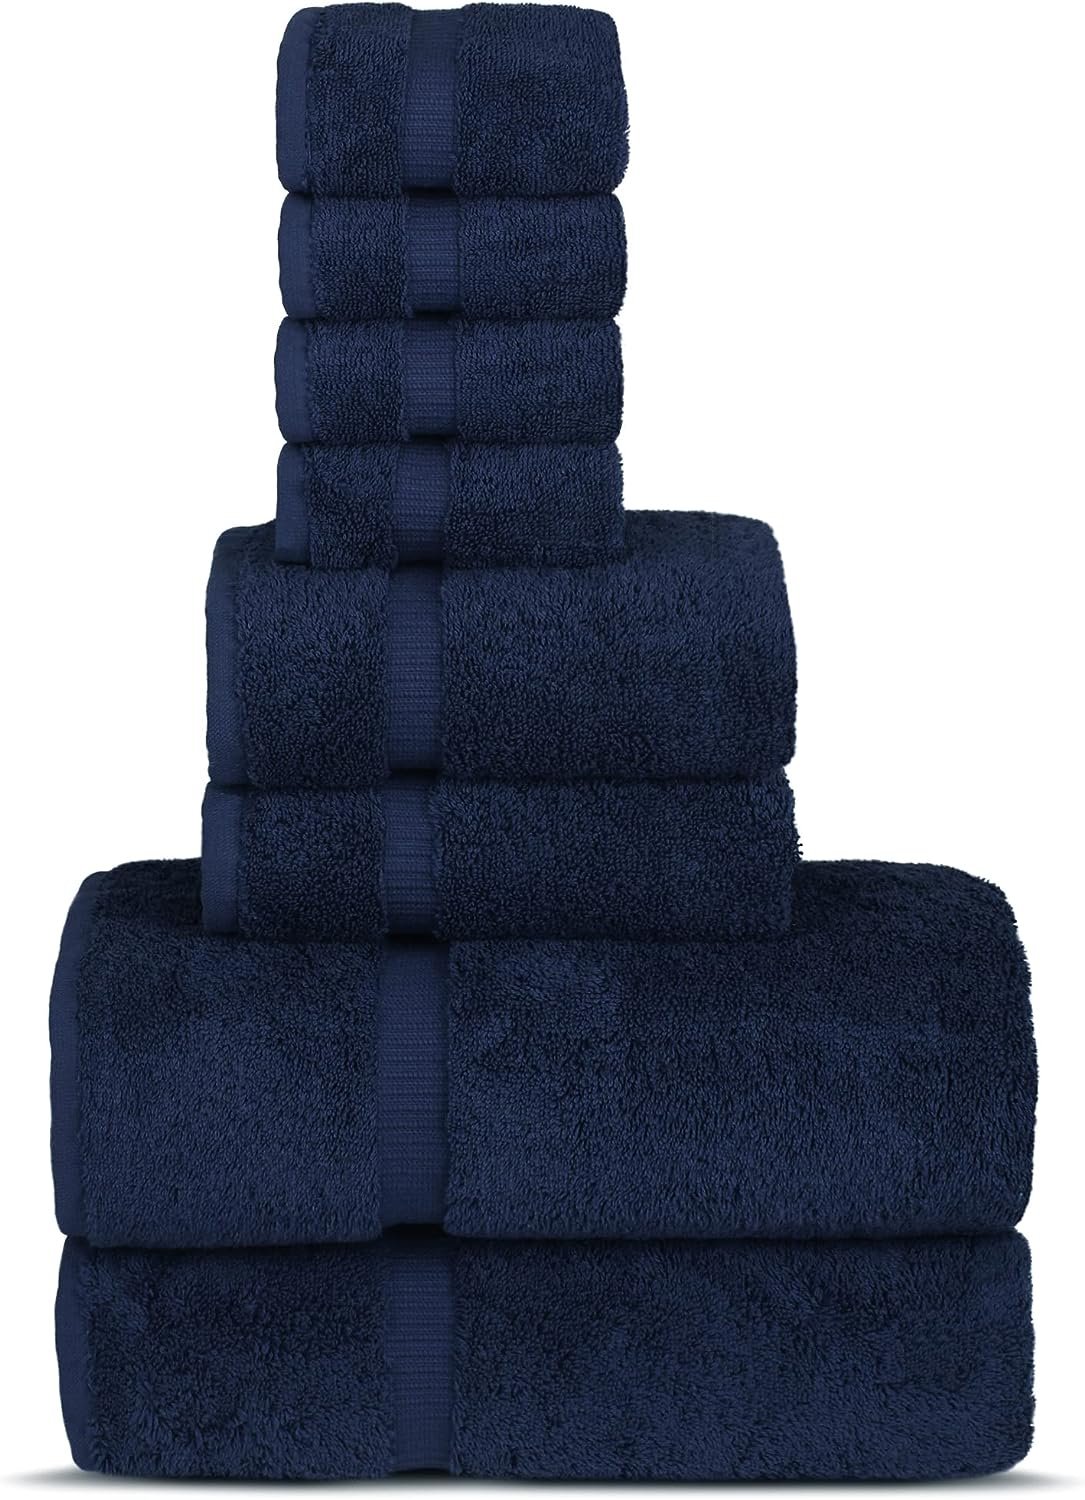 Chakir Turkish Linens | Hotel &amp; Spa Quality 100% Cotton Premium Turkish Towels | Soft &amp; Absorbent (8-Piece Towel Sets, Navy Blue)